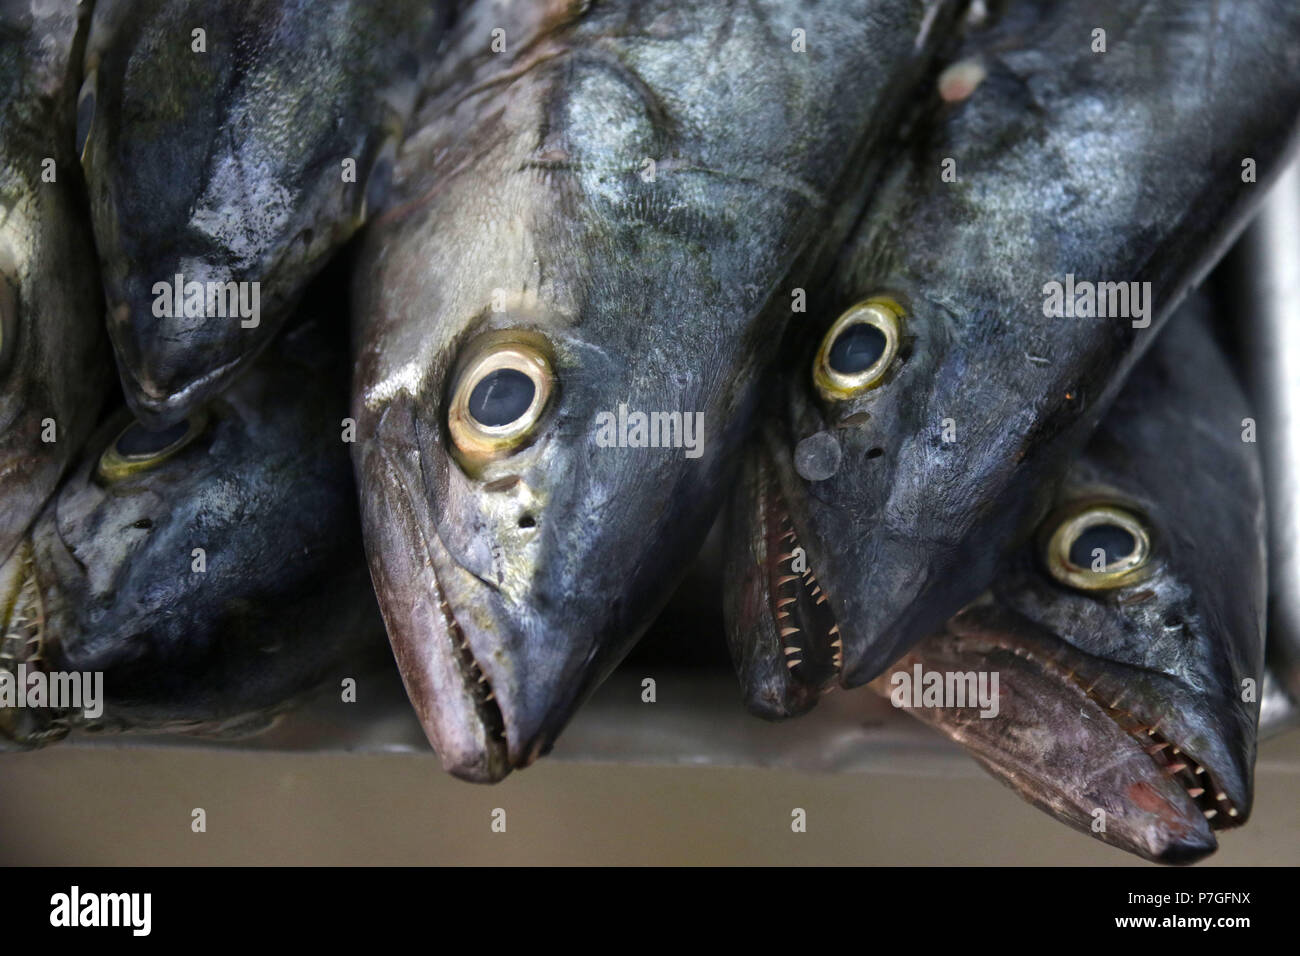 Spanish mackerel fish caught on hook and fishing line in ocean Stock Photo  - Alamy